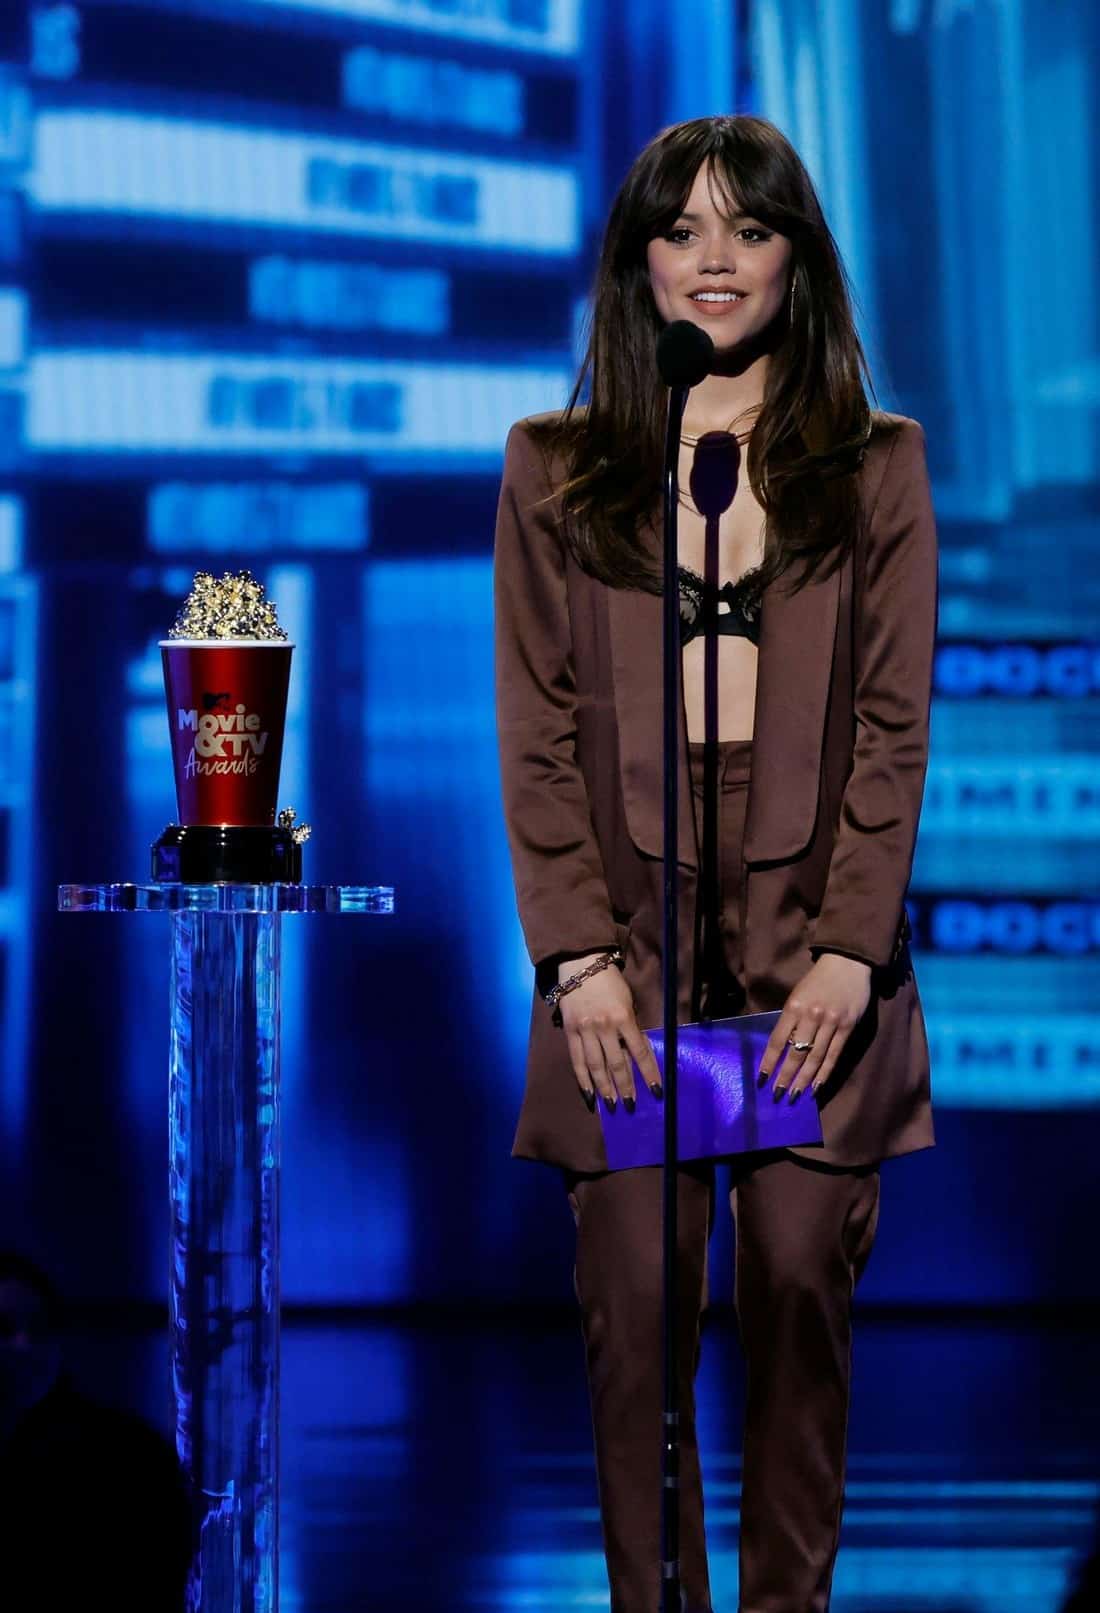 Jenna Ortega Rocks Brown Pantsuit and Black Lace Bra at MTV Awards